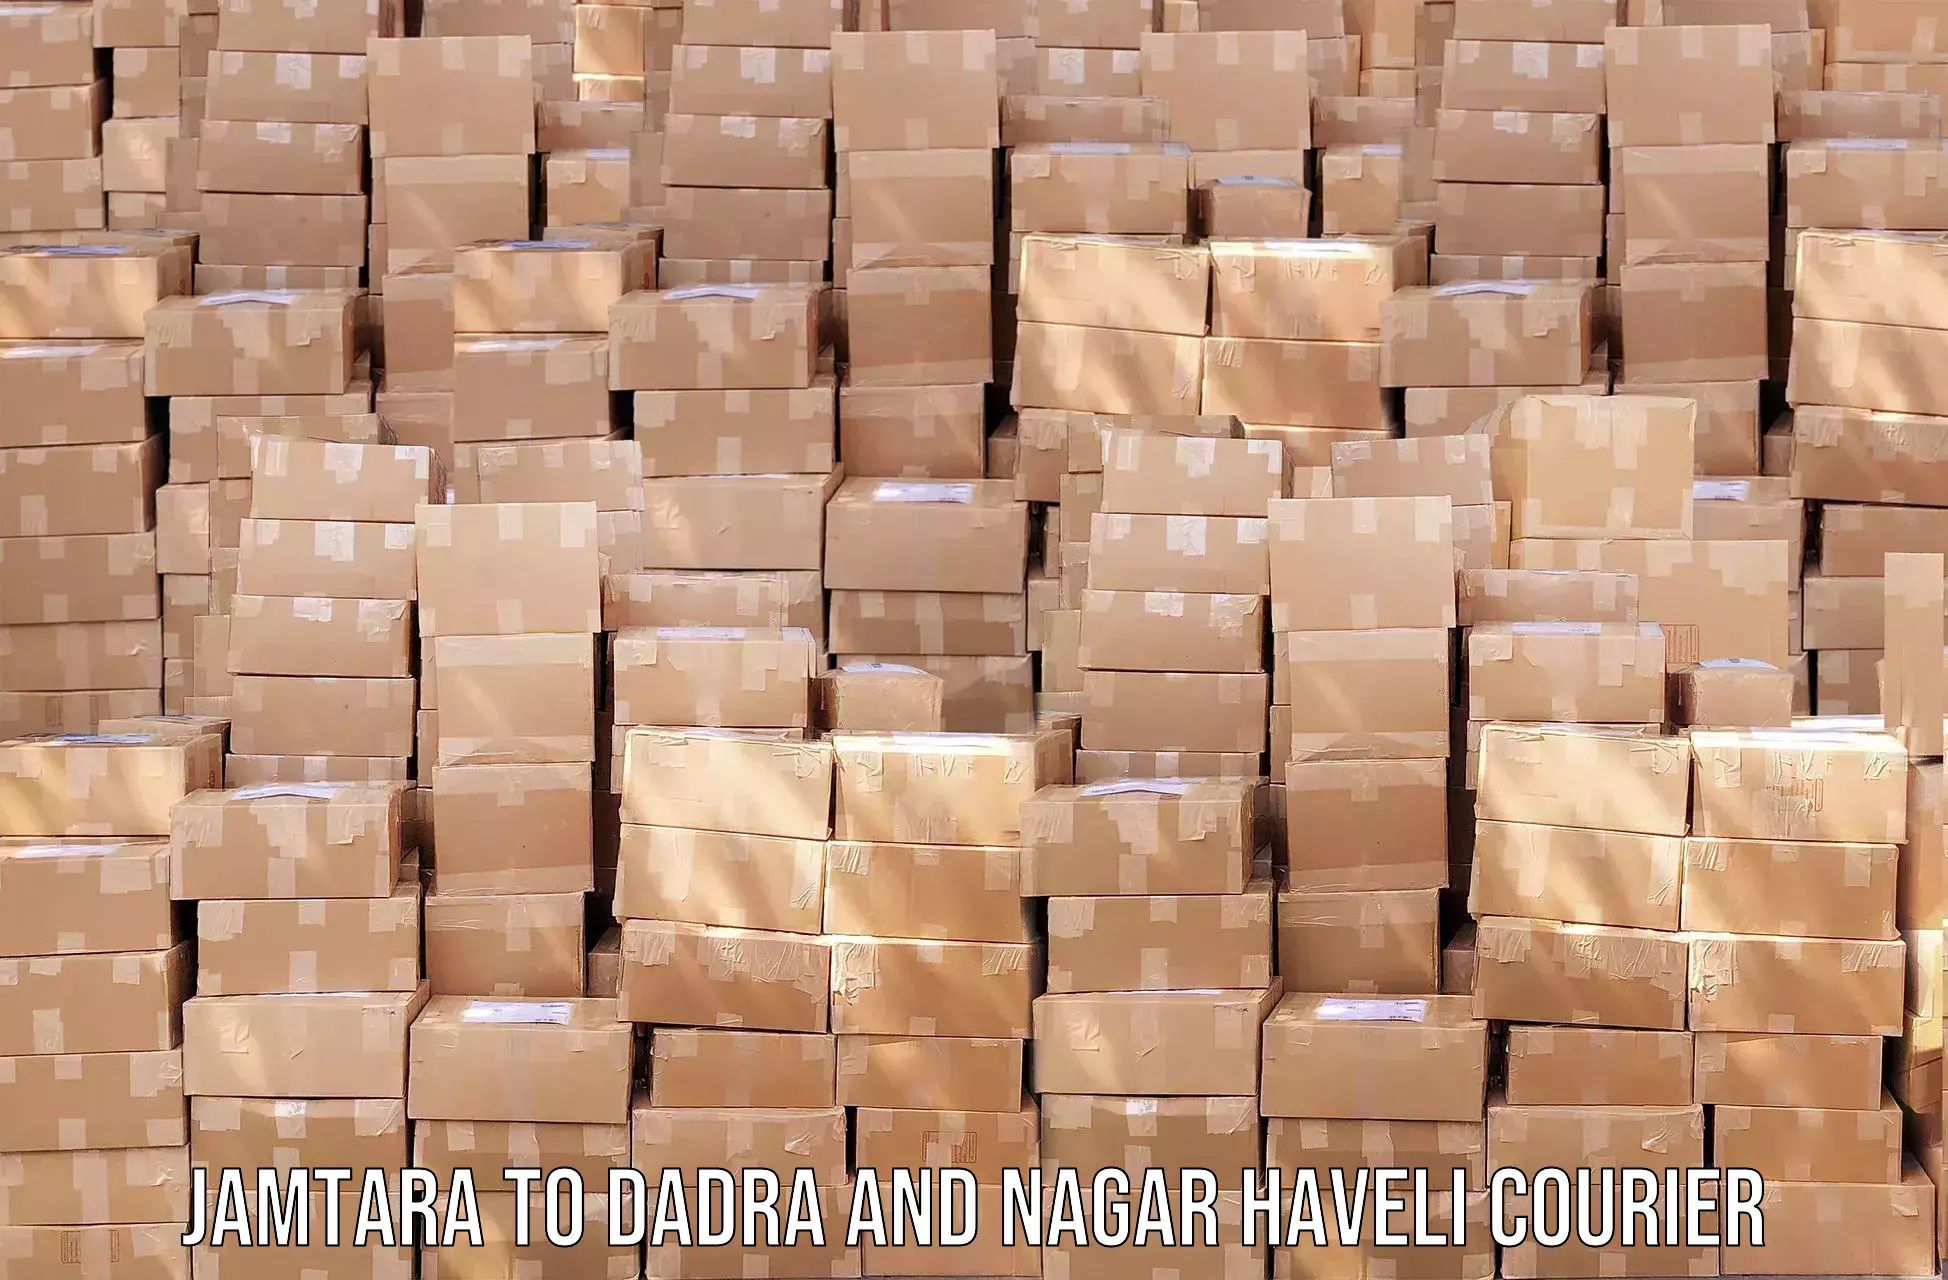 Courier service innovation Jamtara to Dadra and Nagar Haveli